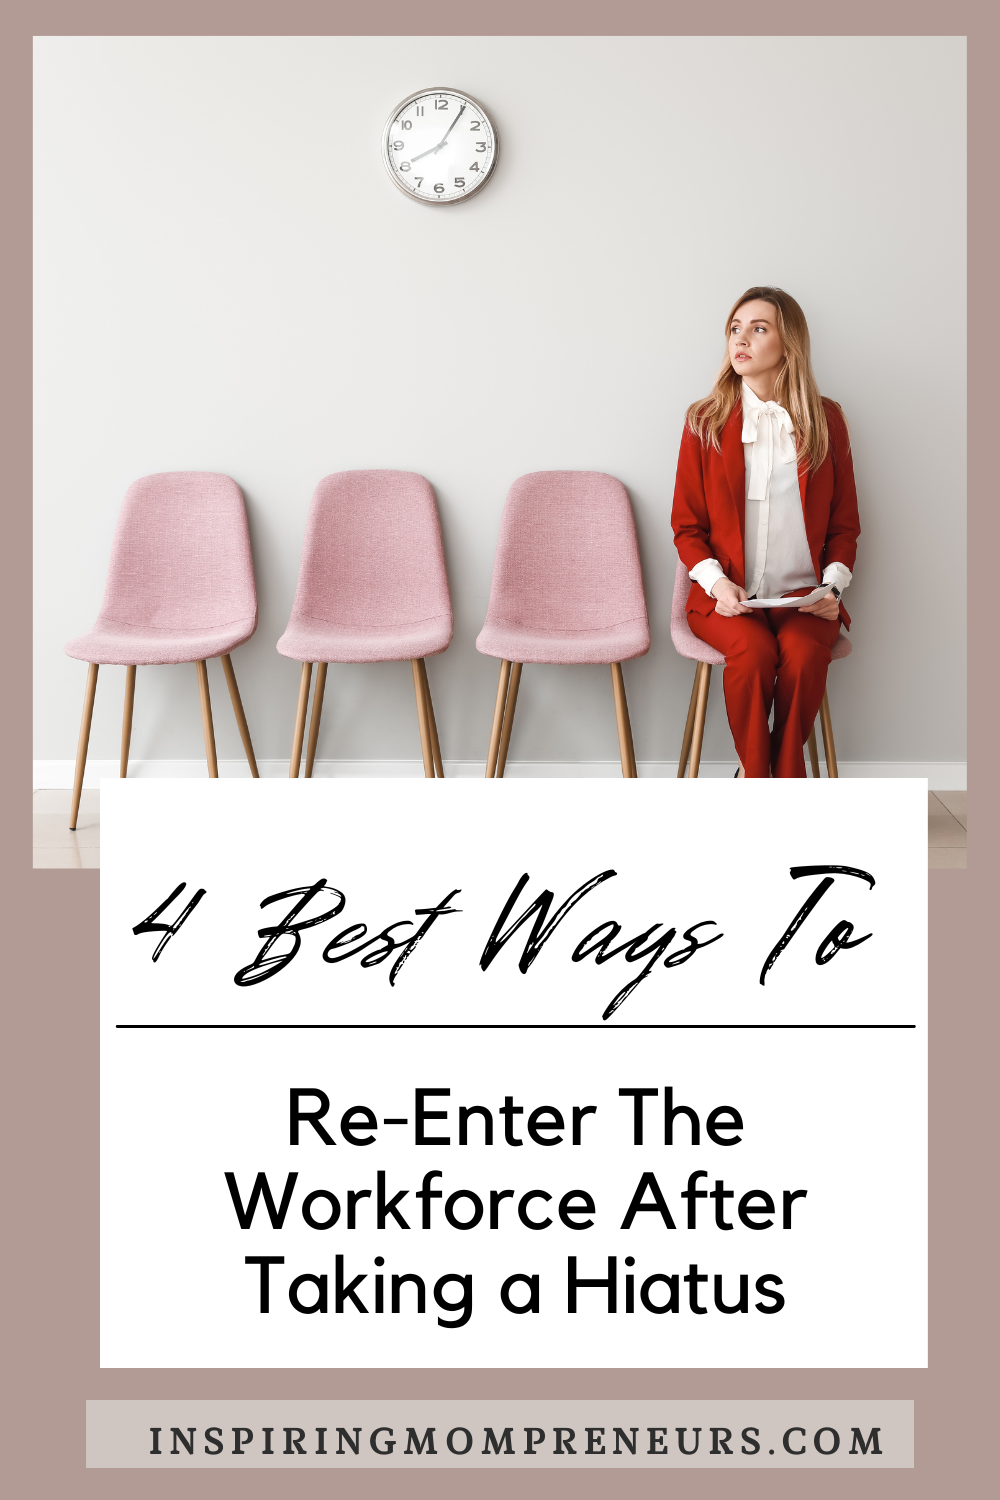 re-enter the workforce